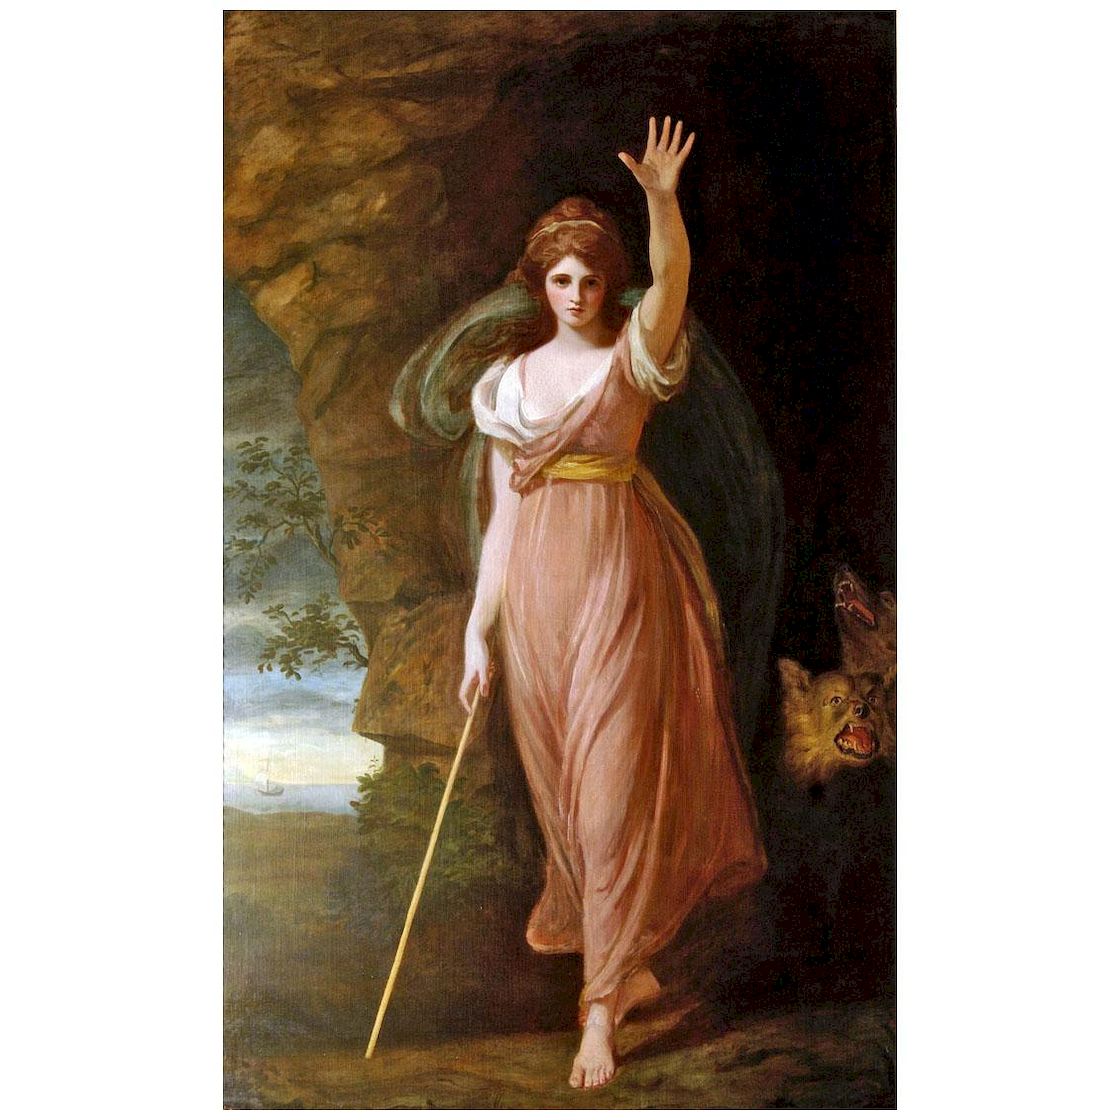 George Romney. Emma Hart, Lady Hamilton as Circe. 1782